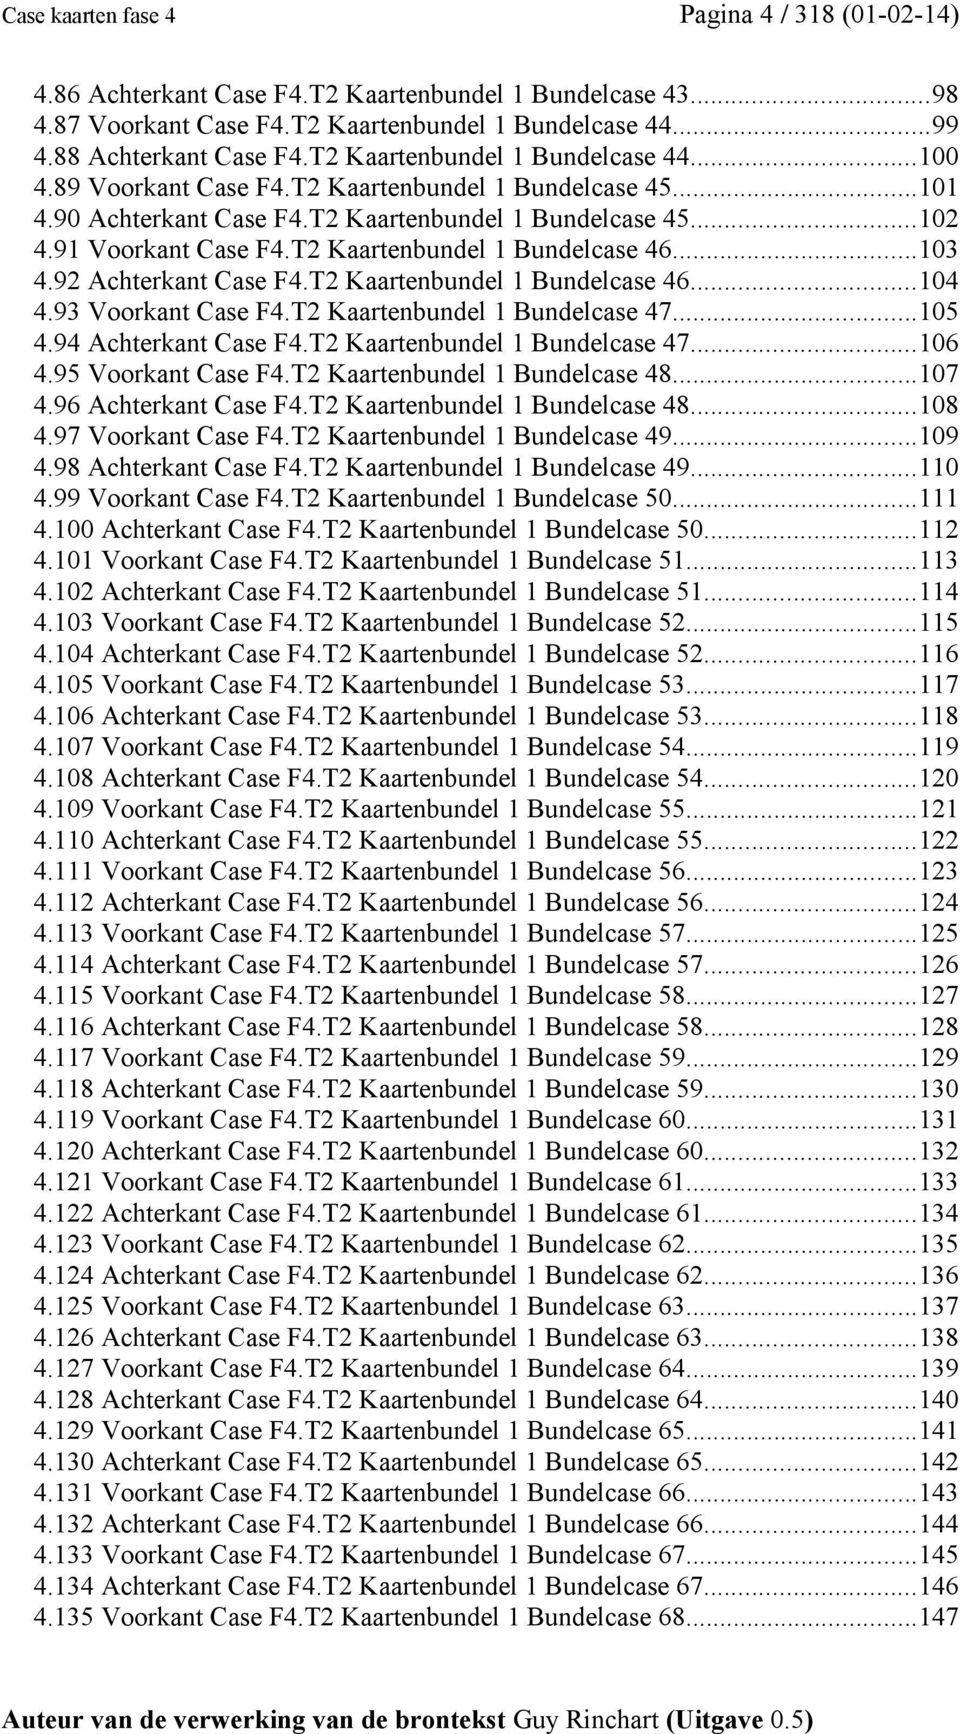 T2 Kaartenbundel 1 Bundelcase 46...103 4.92 Achterkant Case F4.T2 Kaartenbundel 1 Bundelcase 46...104 4.93 Voorkant Case F4.T2 Kaartenbundel 1 Bundelcase 47...105 4.94 Achterkant Case F4.